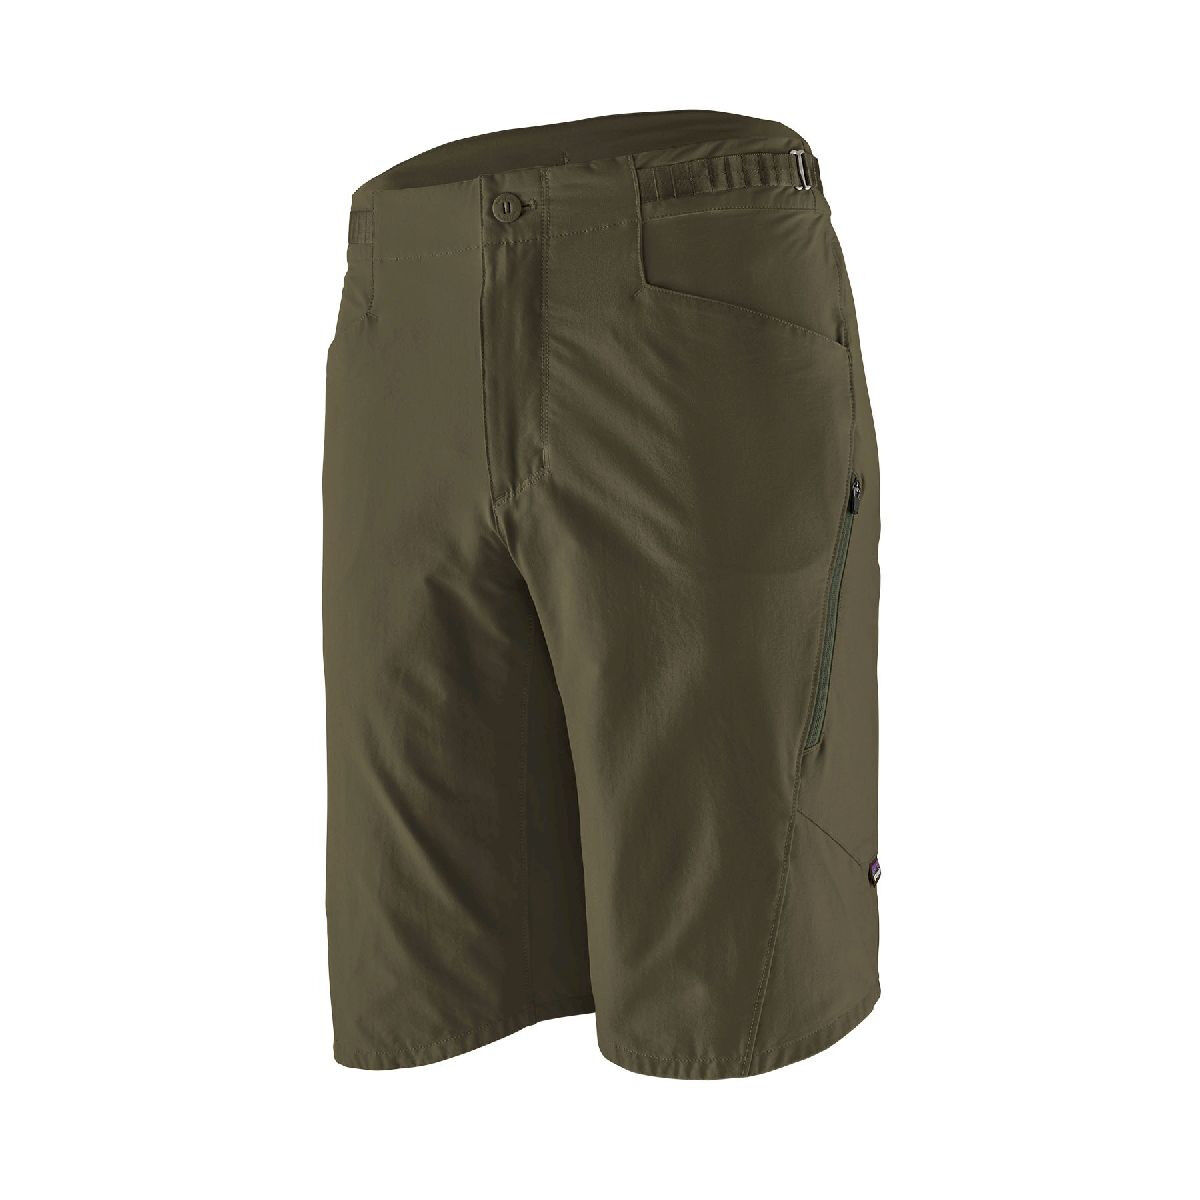 Patagonia Dirt Craft Bike Shorts - Pantalones cortos MTB - Hombre